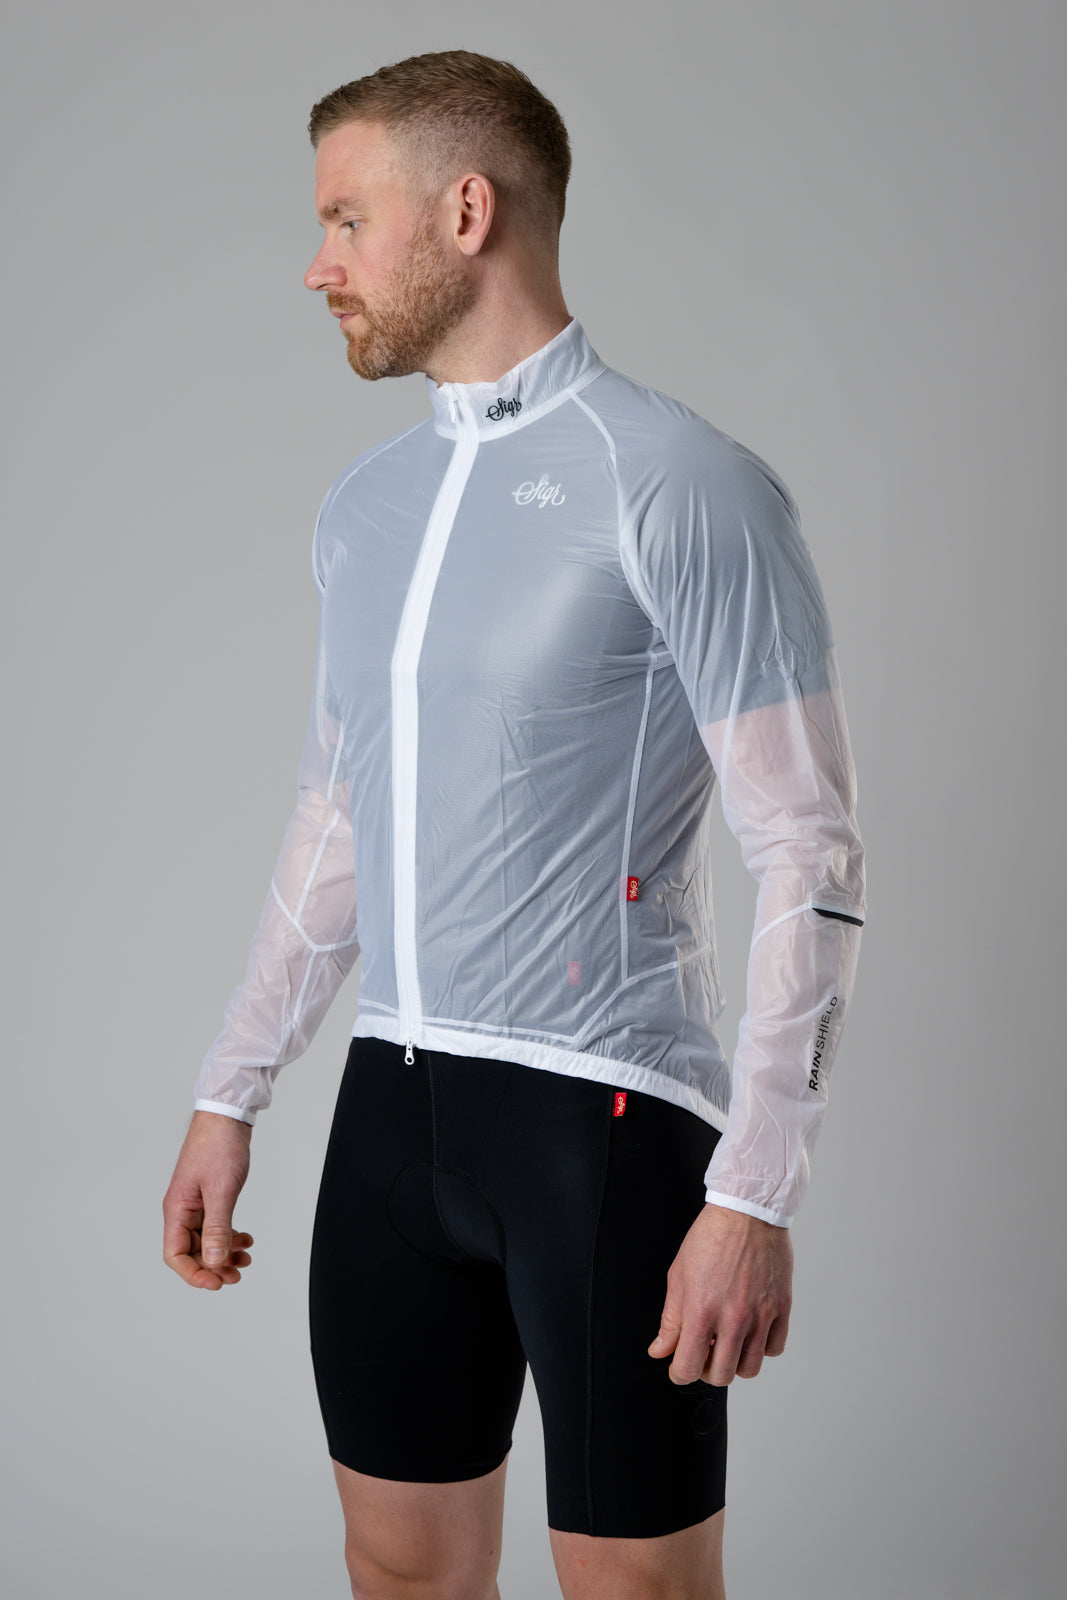 Sigr Näckrosleden - Transparent PRO Cycling Wind/Rain Jacket for Men: Ultra-Lightweight